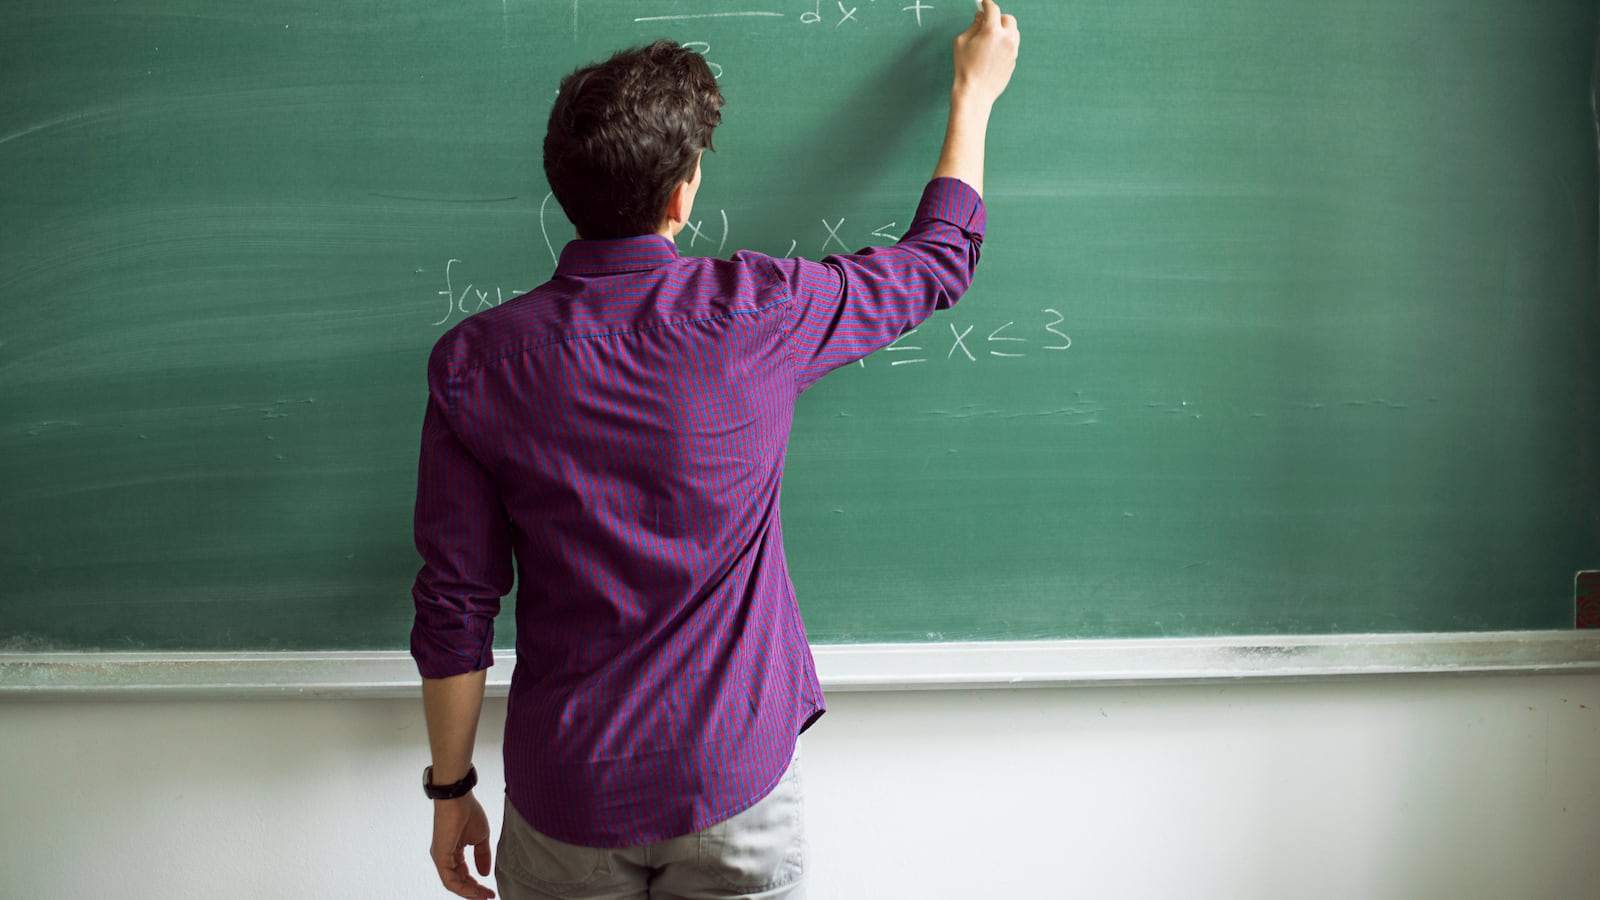 Student writing on blackboard